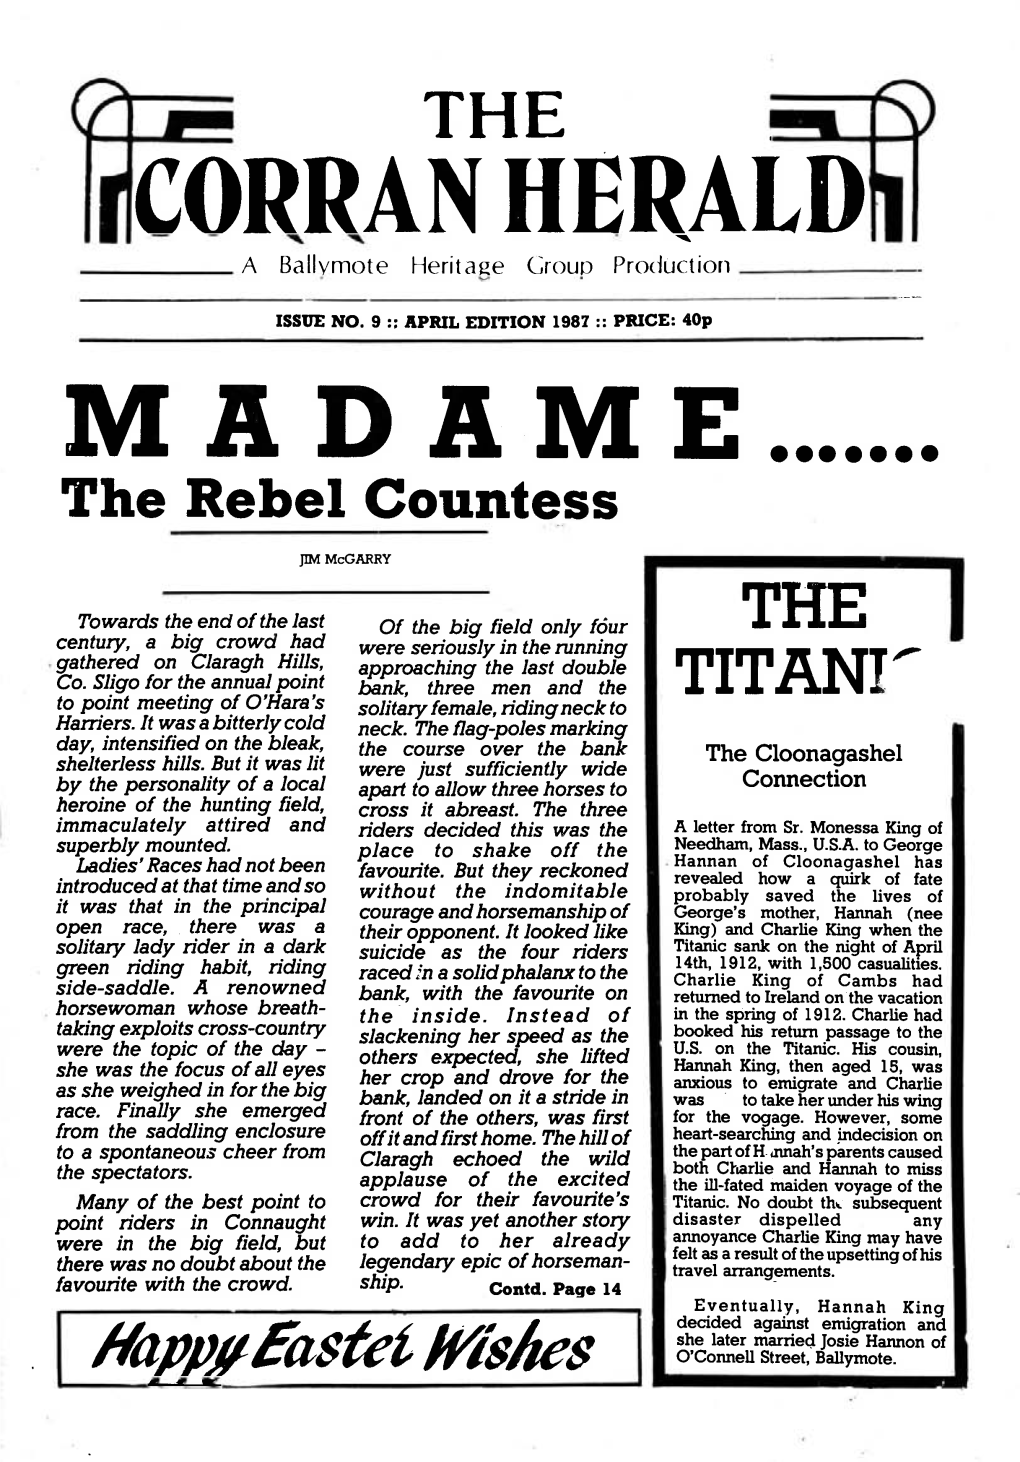 The Corran Herald Issue 09, 1987